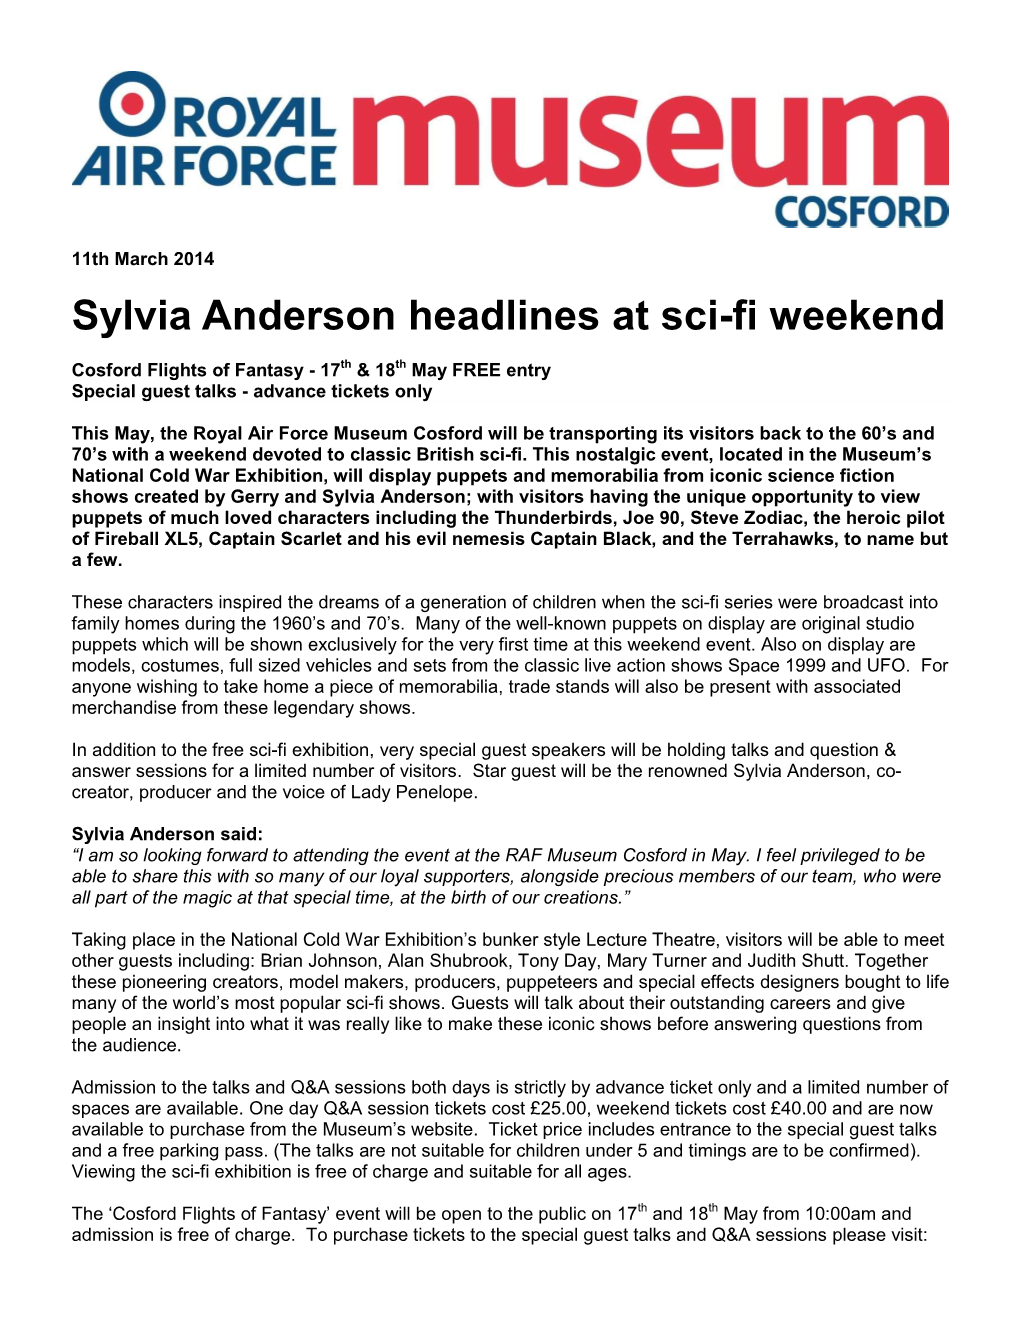 Sylvia Anderson Headlines at Sci-Fi Weekend